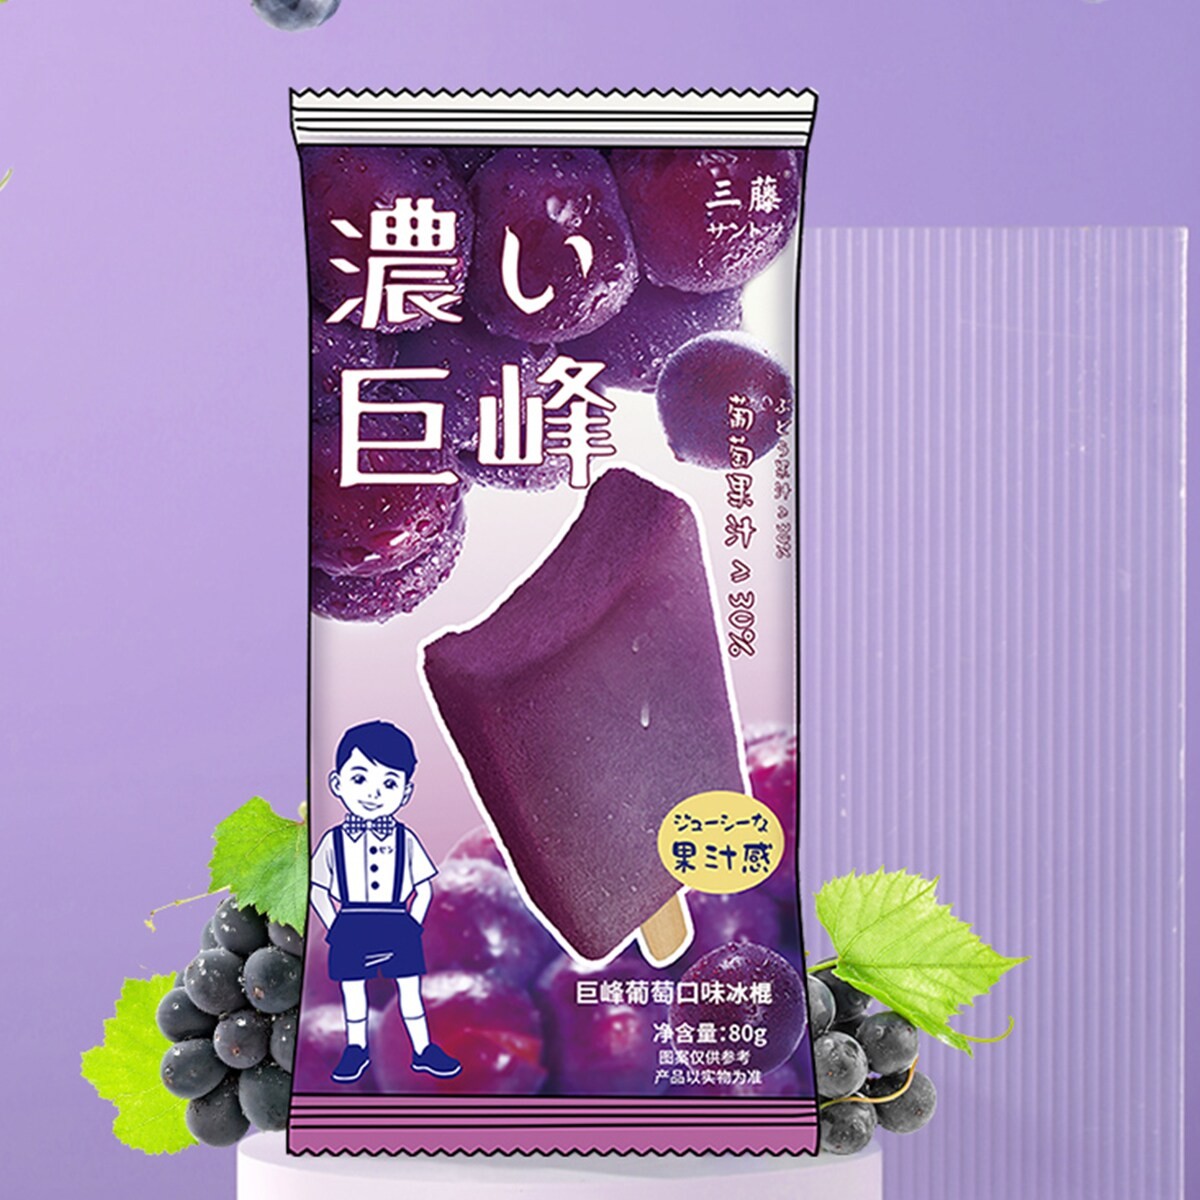 santo-kyoho-grape-popsicle